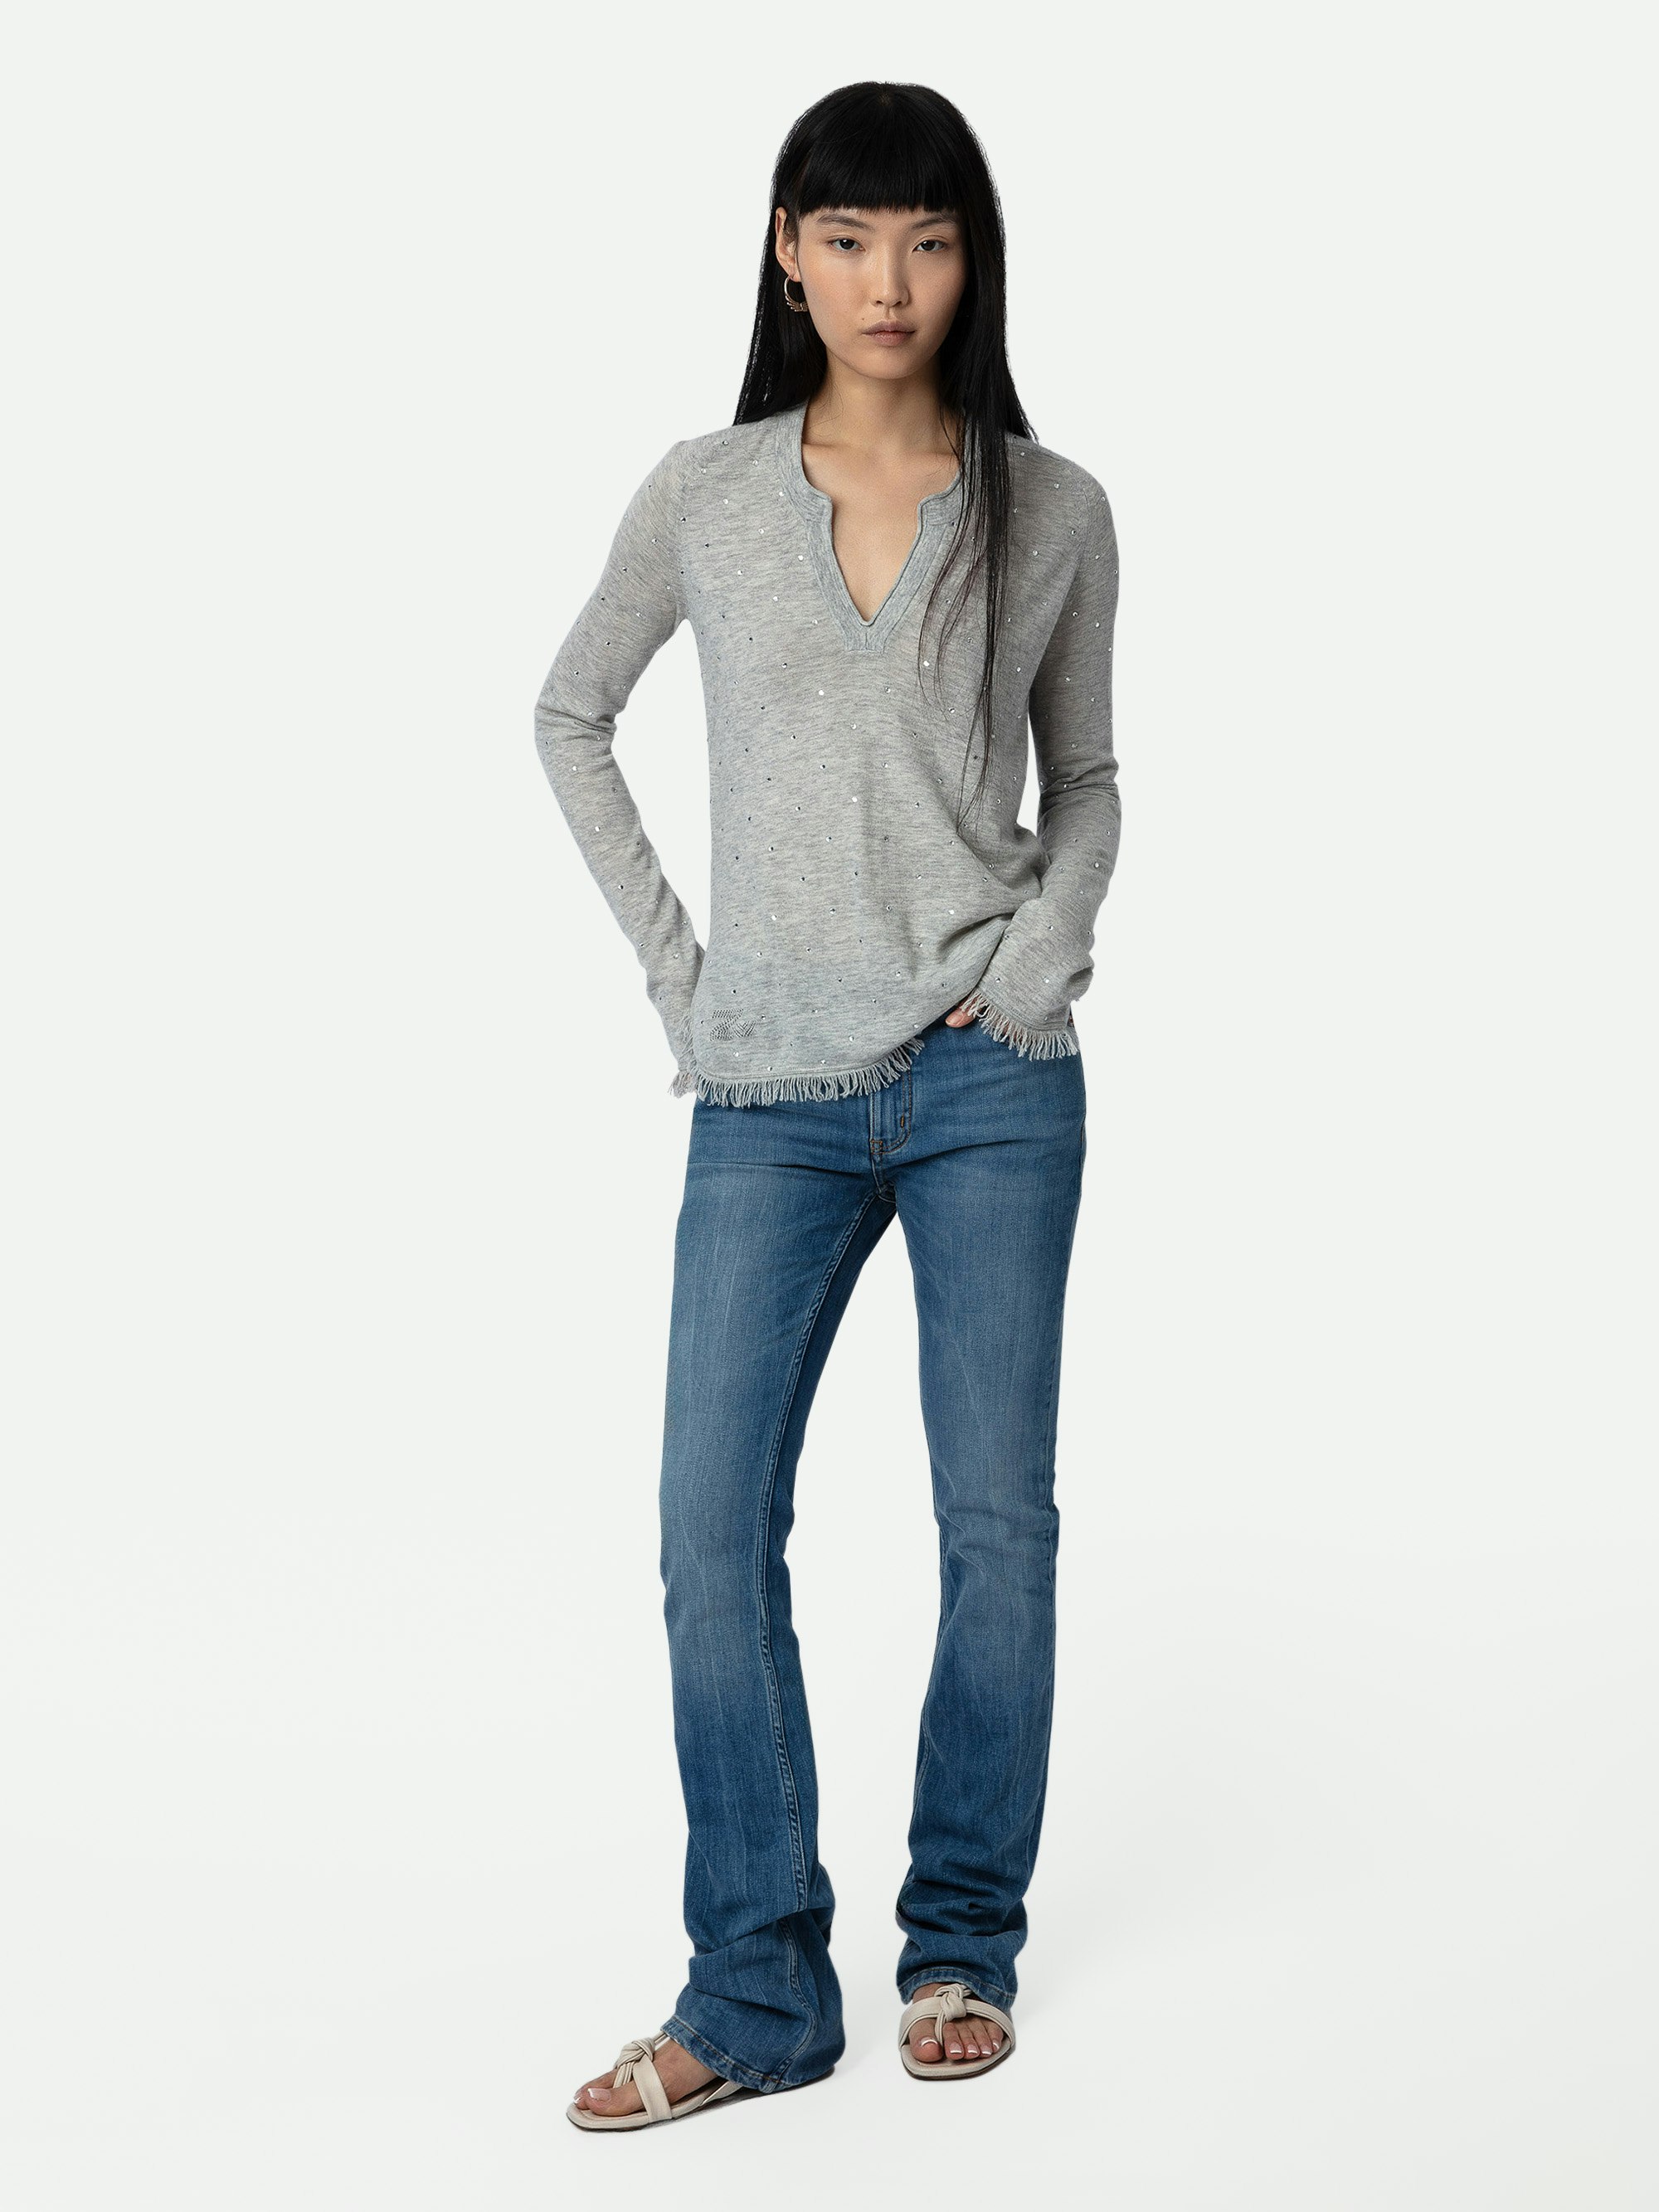 Riviera Cashmere Sweater - Women's grey cashmere sweater with diamanté.